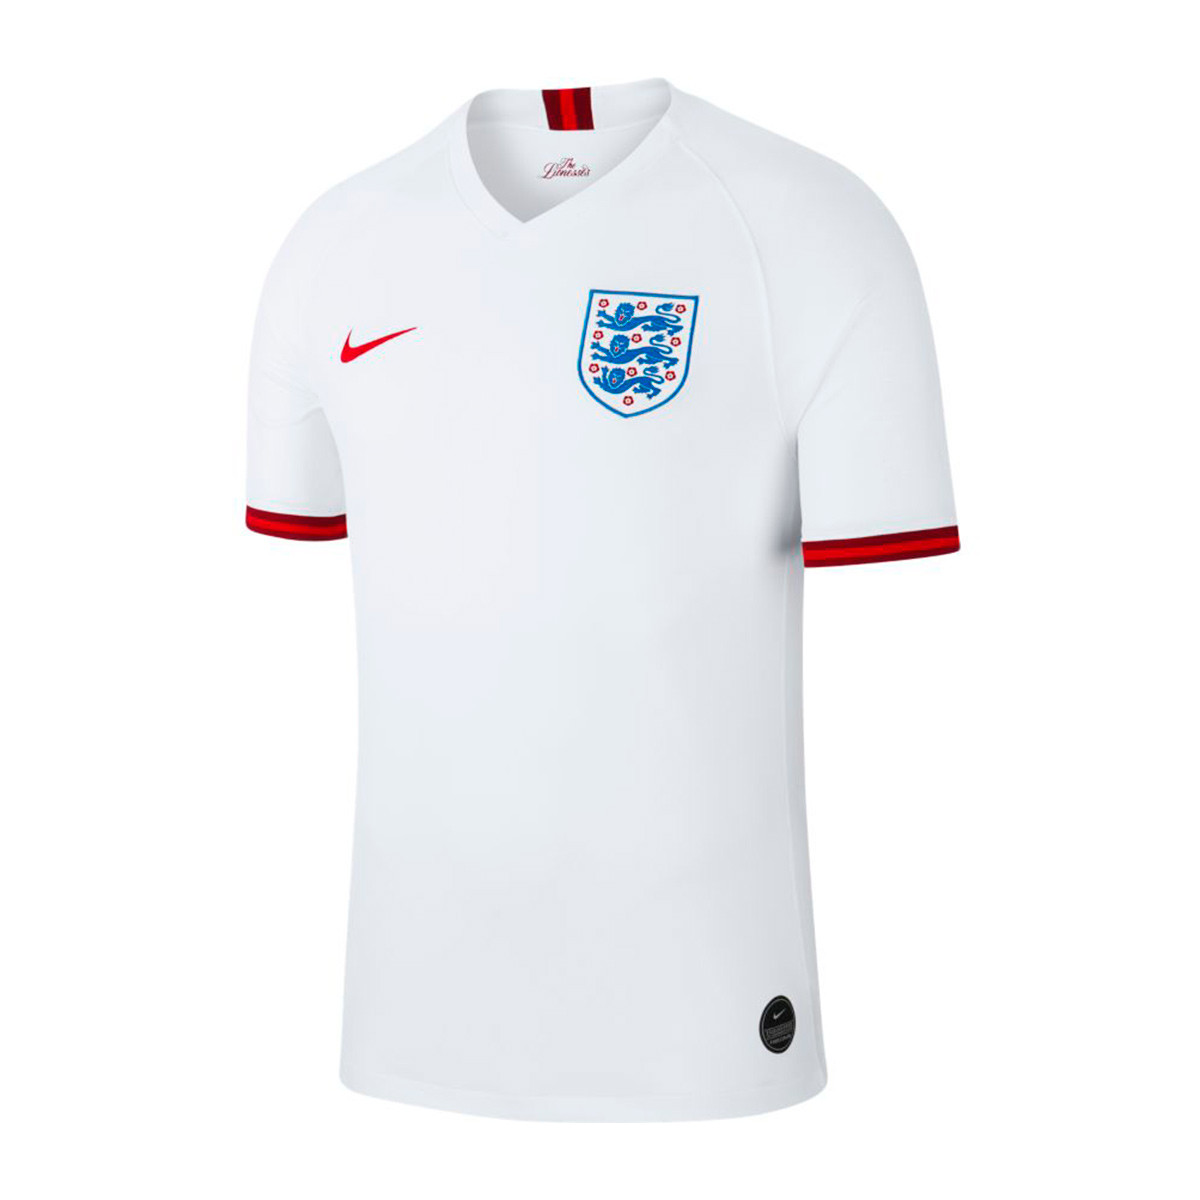 Camiseta Nike Seleccion Inglaterra Breathe Stadium SS Primera Equipación  2018-2019 White-Challenge red - Tienda de fútbol Fútbol Emotion